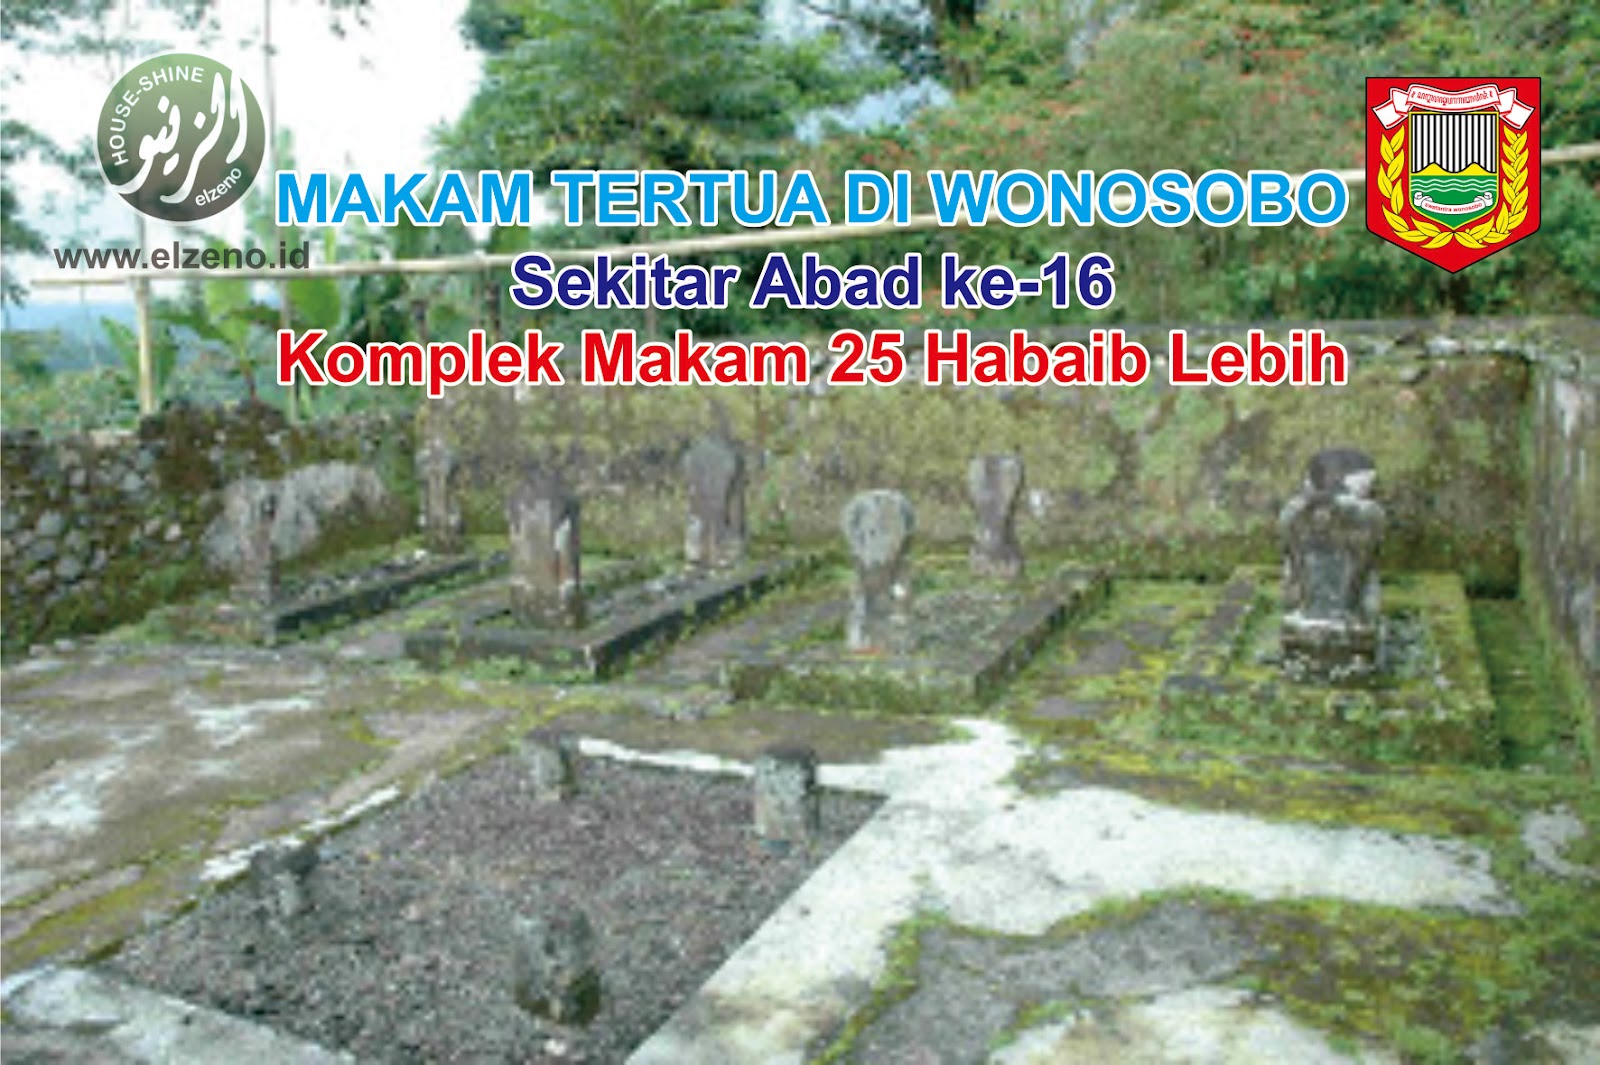 Sejarah Islam Masuk ke Wonosobo